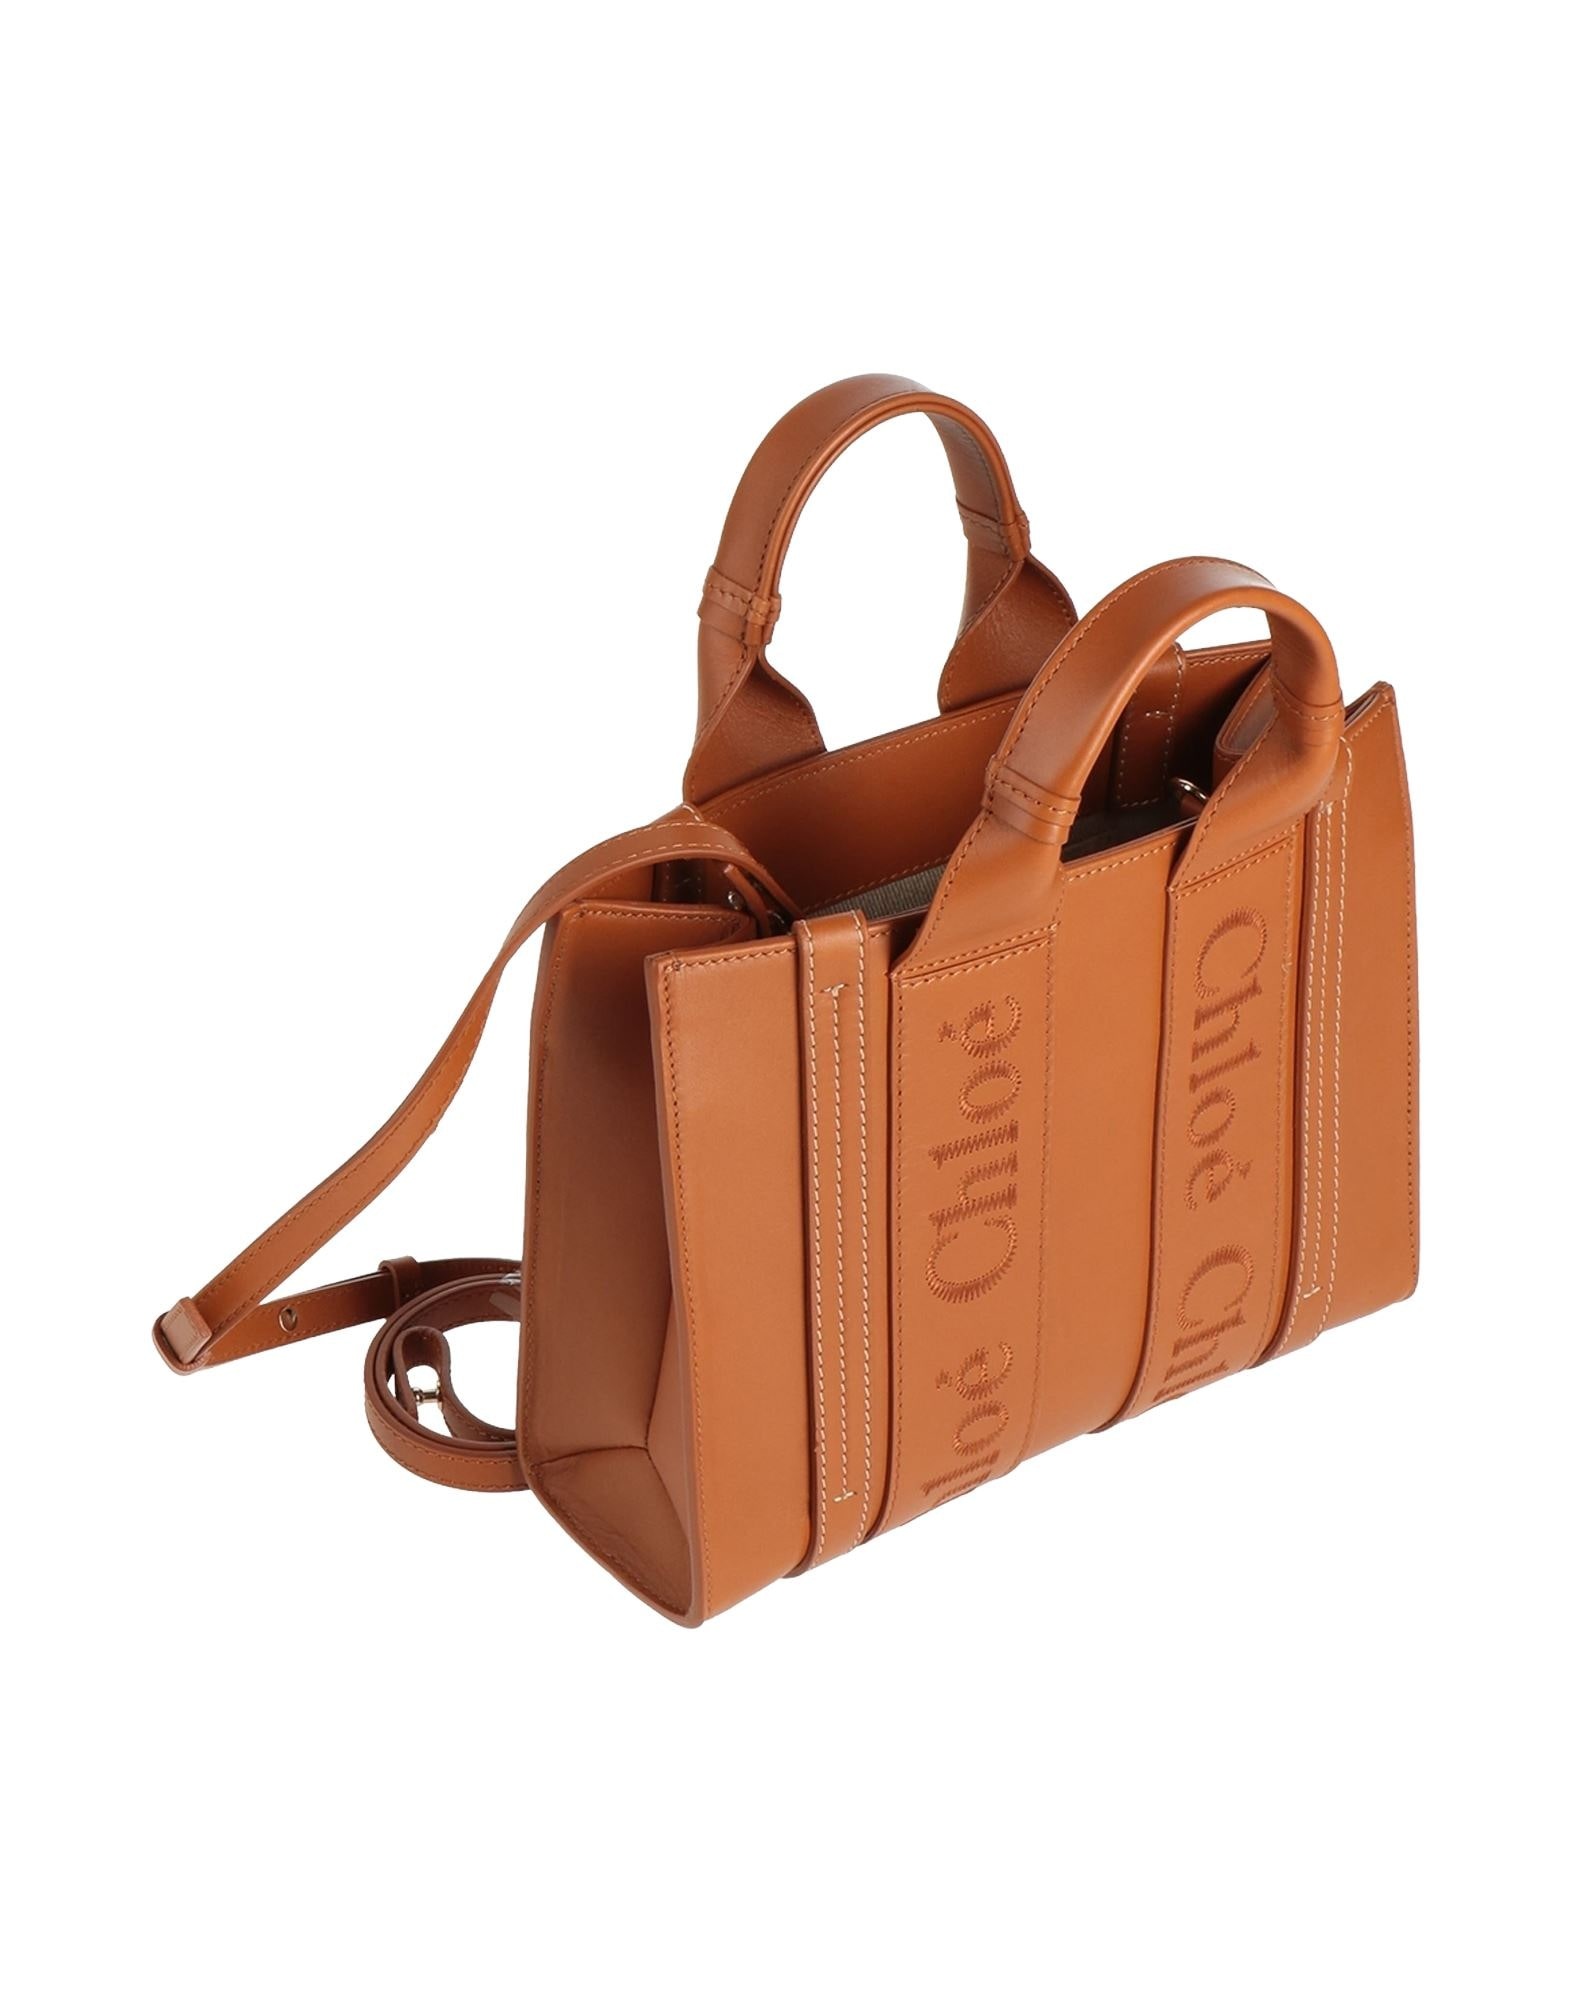 Tan Women's Handbag - 2